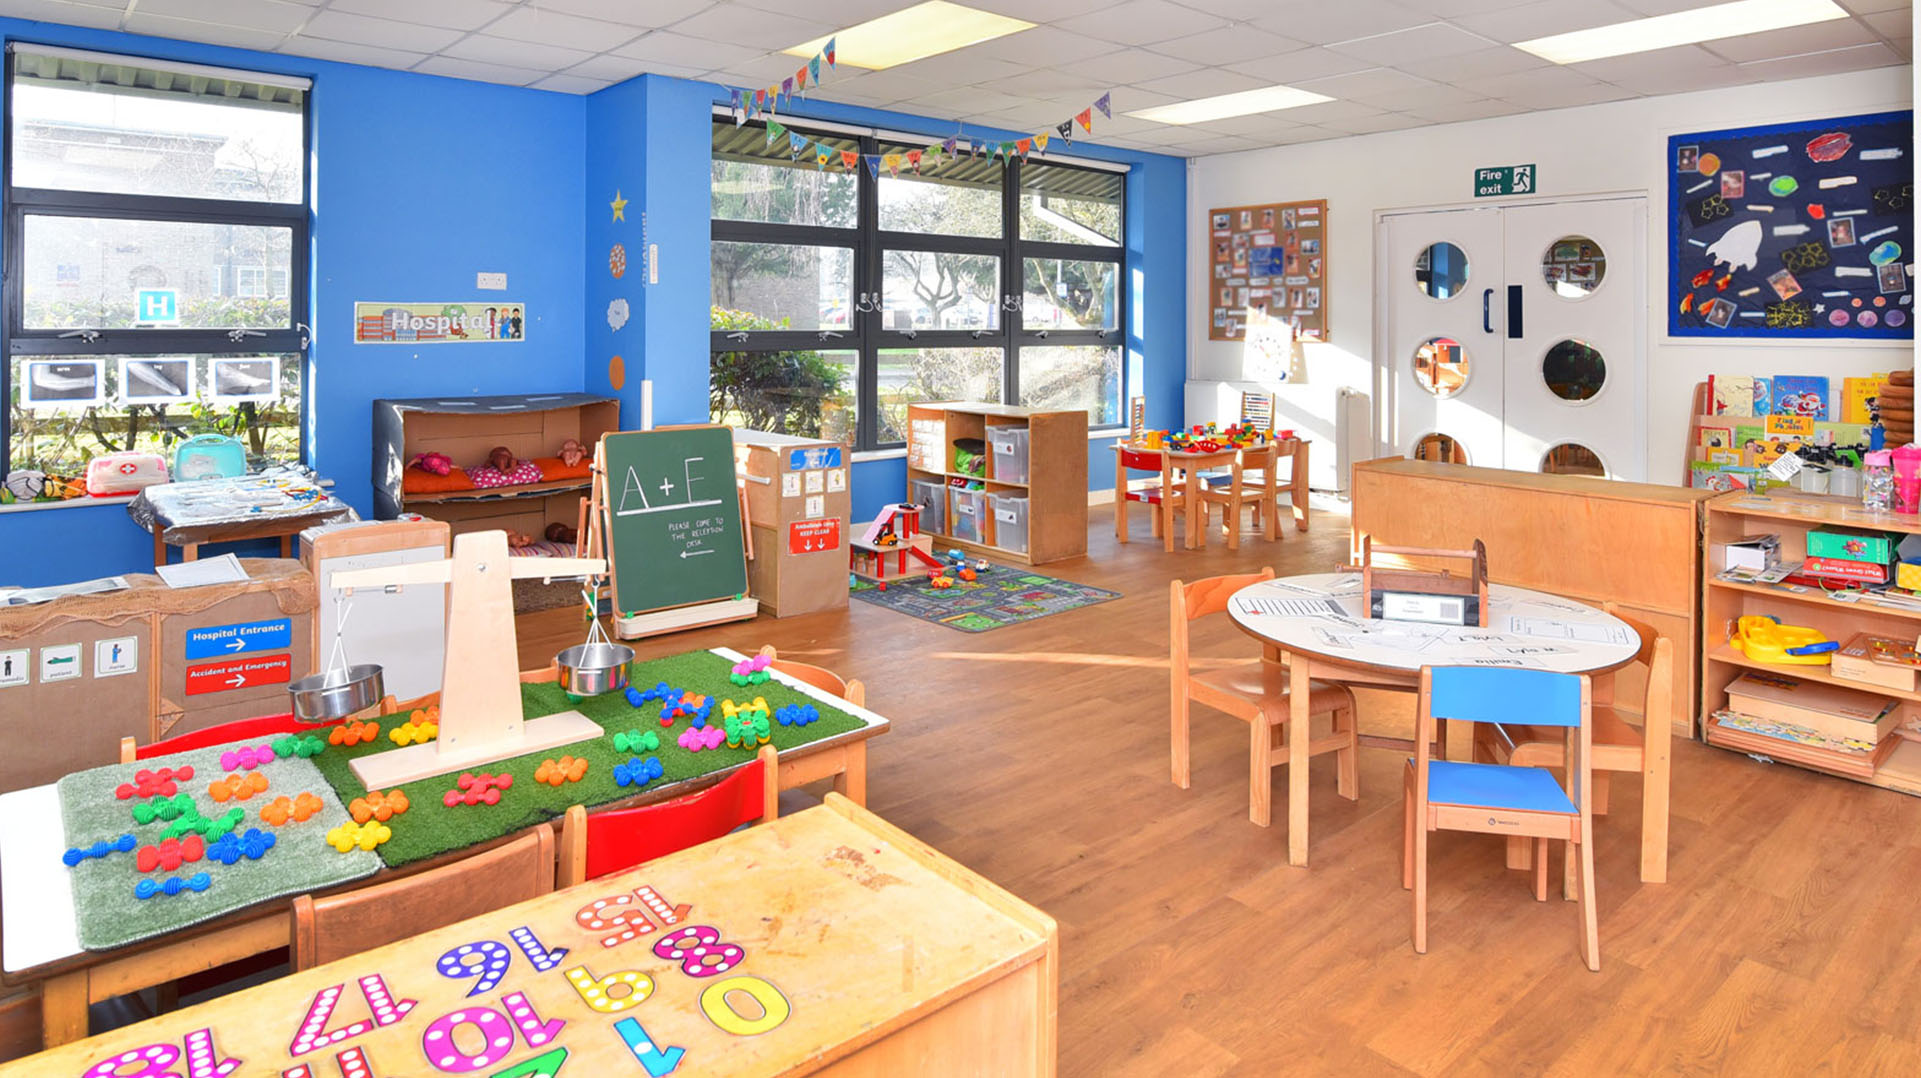 Kings Hill Day Nursery and Preschool